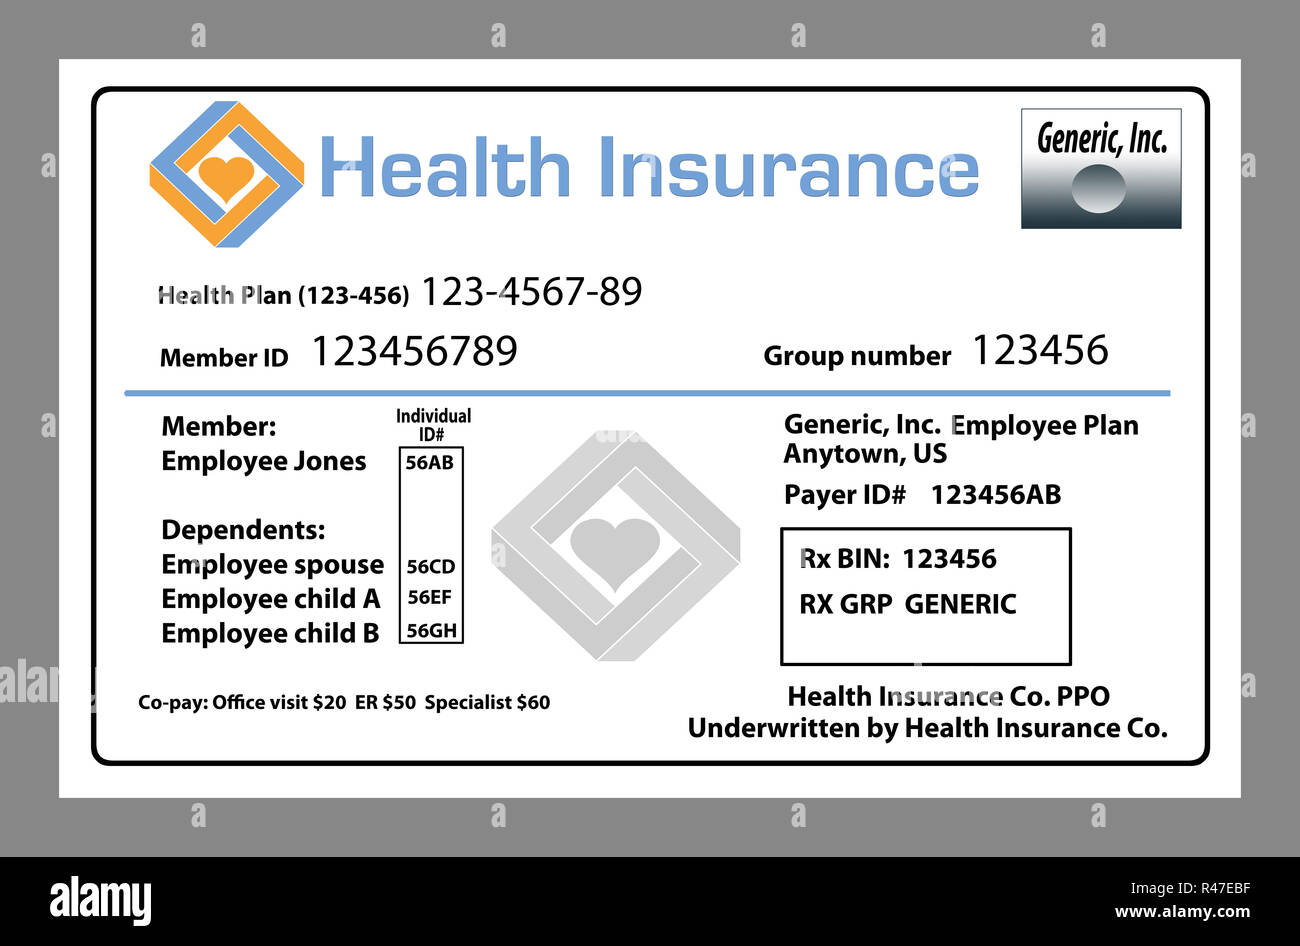 Download Medical Insurance Card Image Images